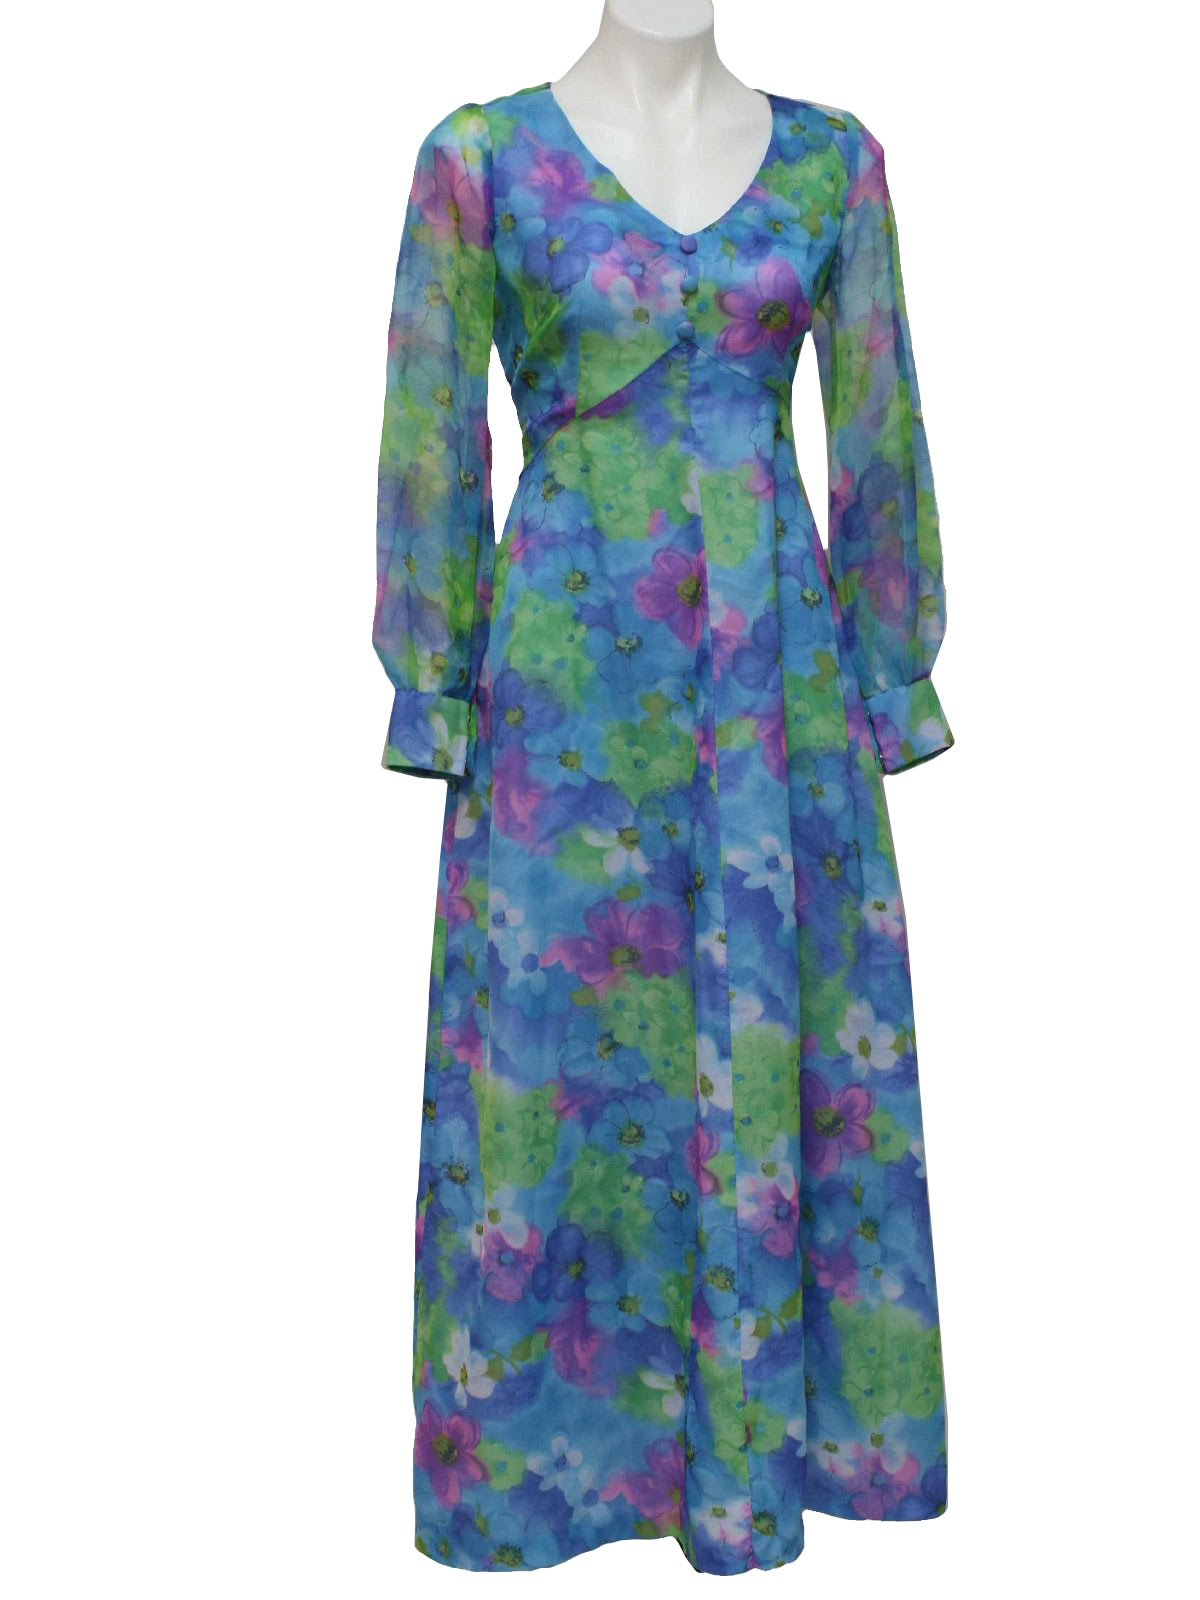 Retro 60s Hawaiian Dress (home sewn) : 60s -home sewn- Womens shades of ...